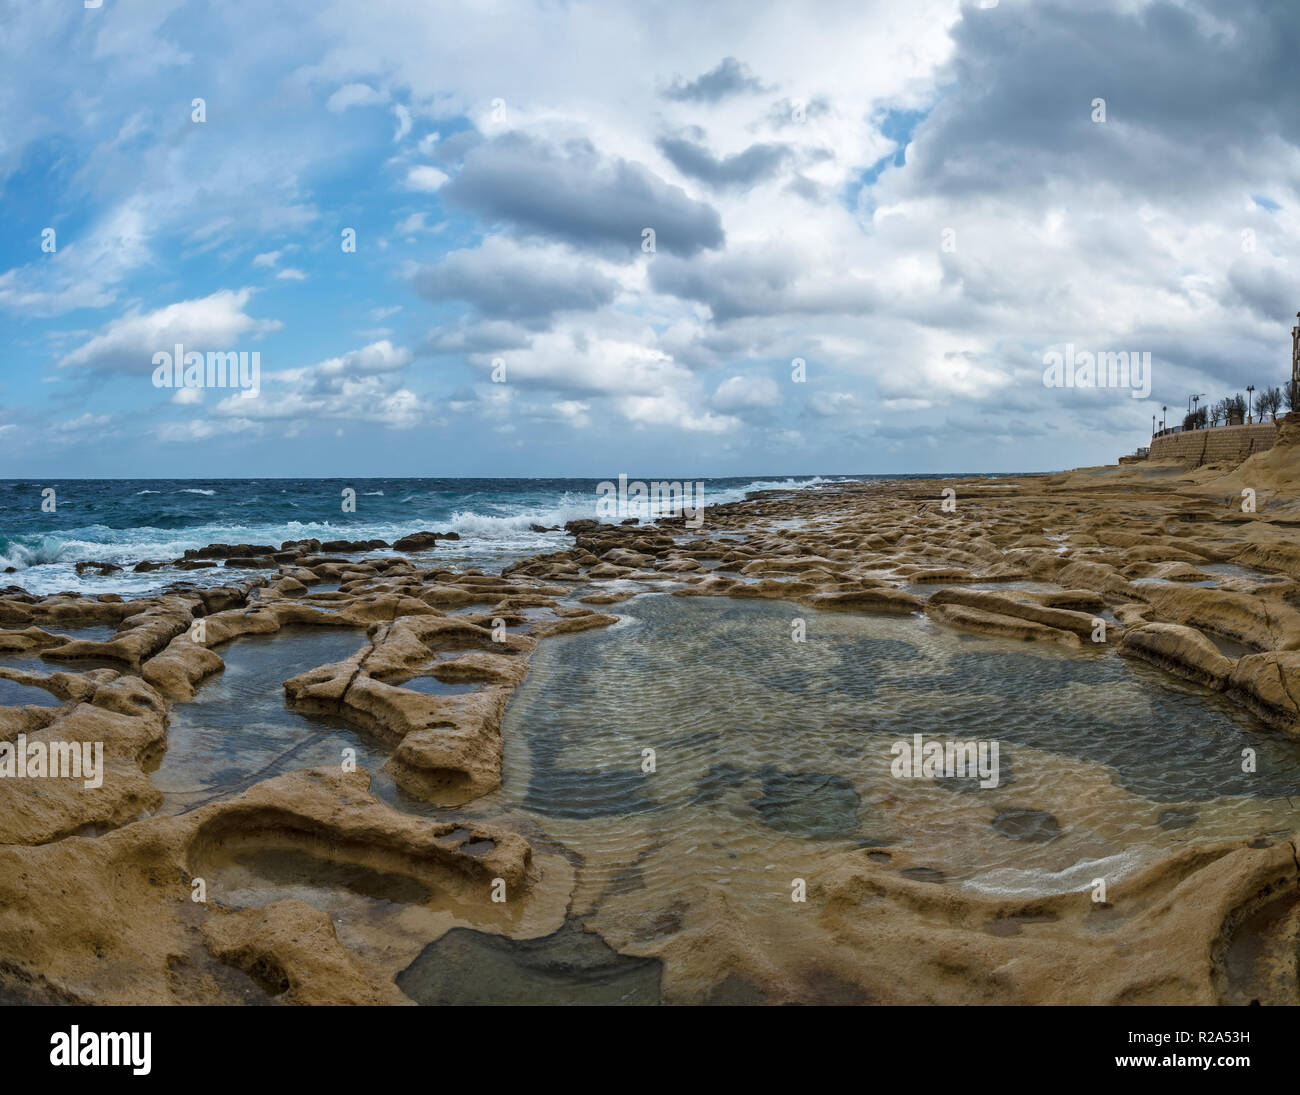 The rocky coast of Sliema, close to Valletta, Malta. Stock Photo